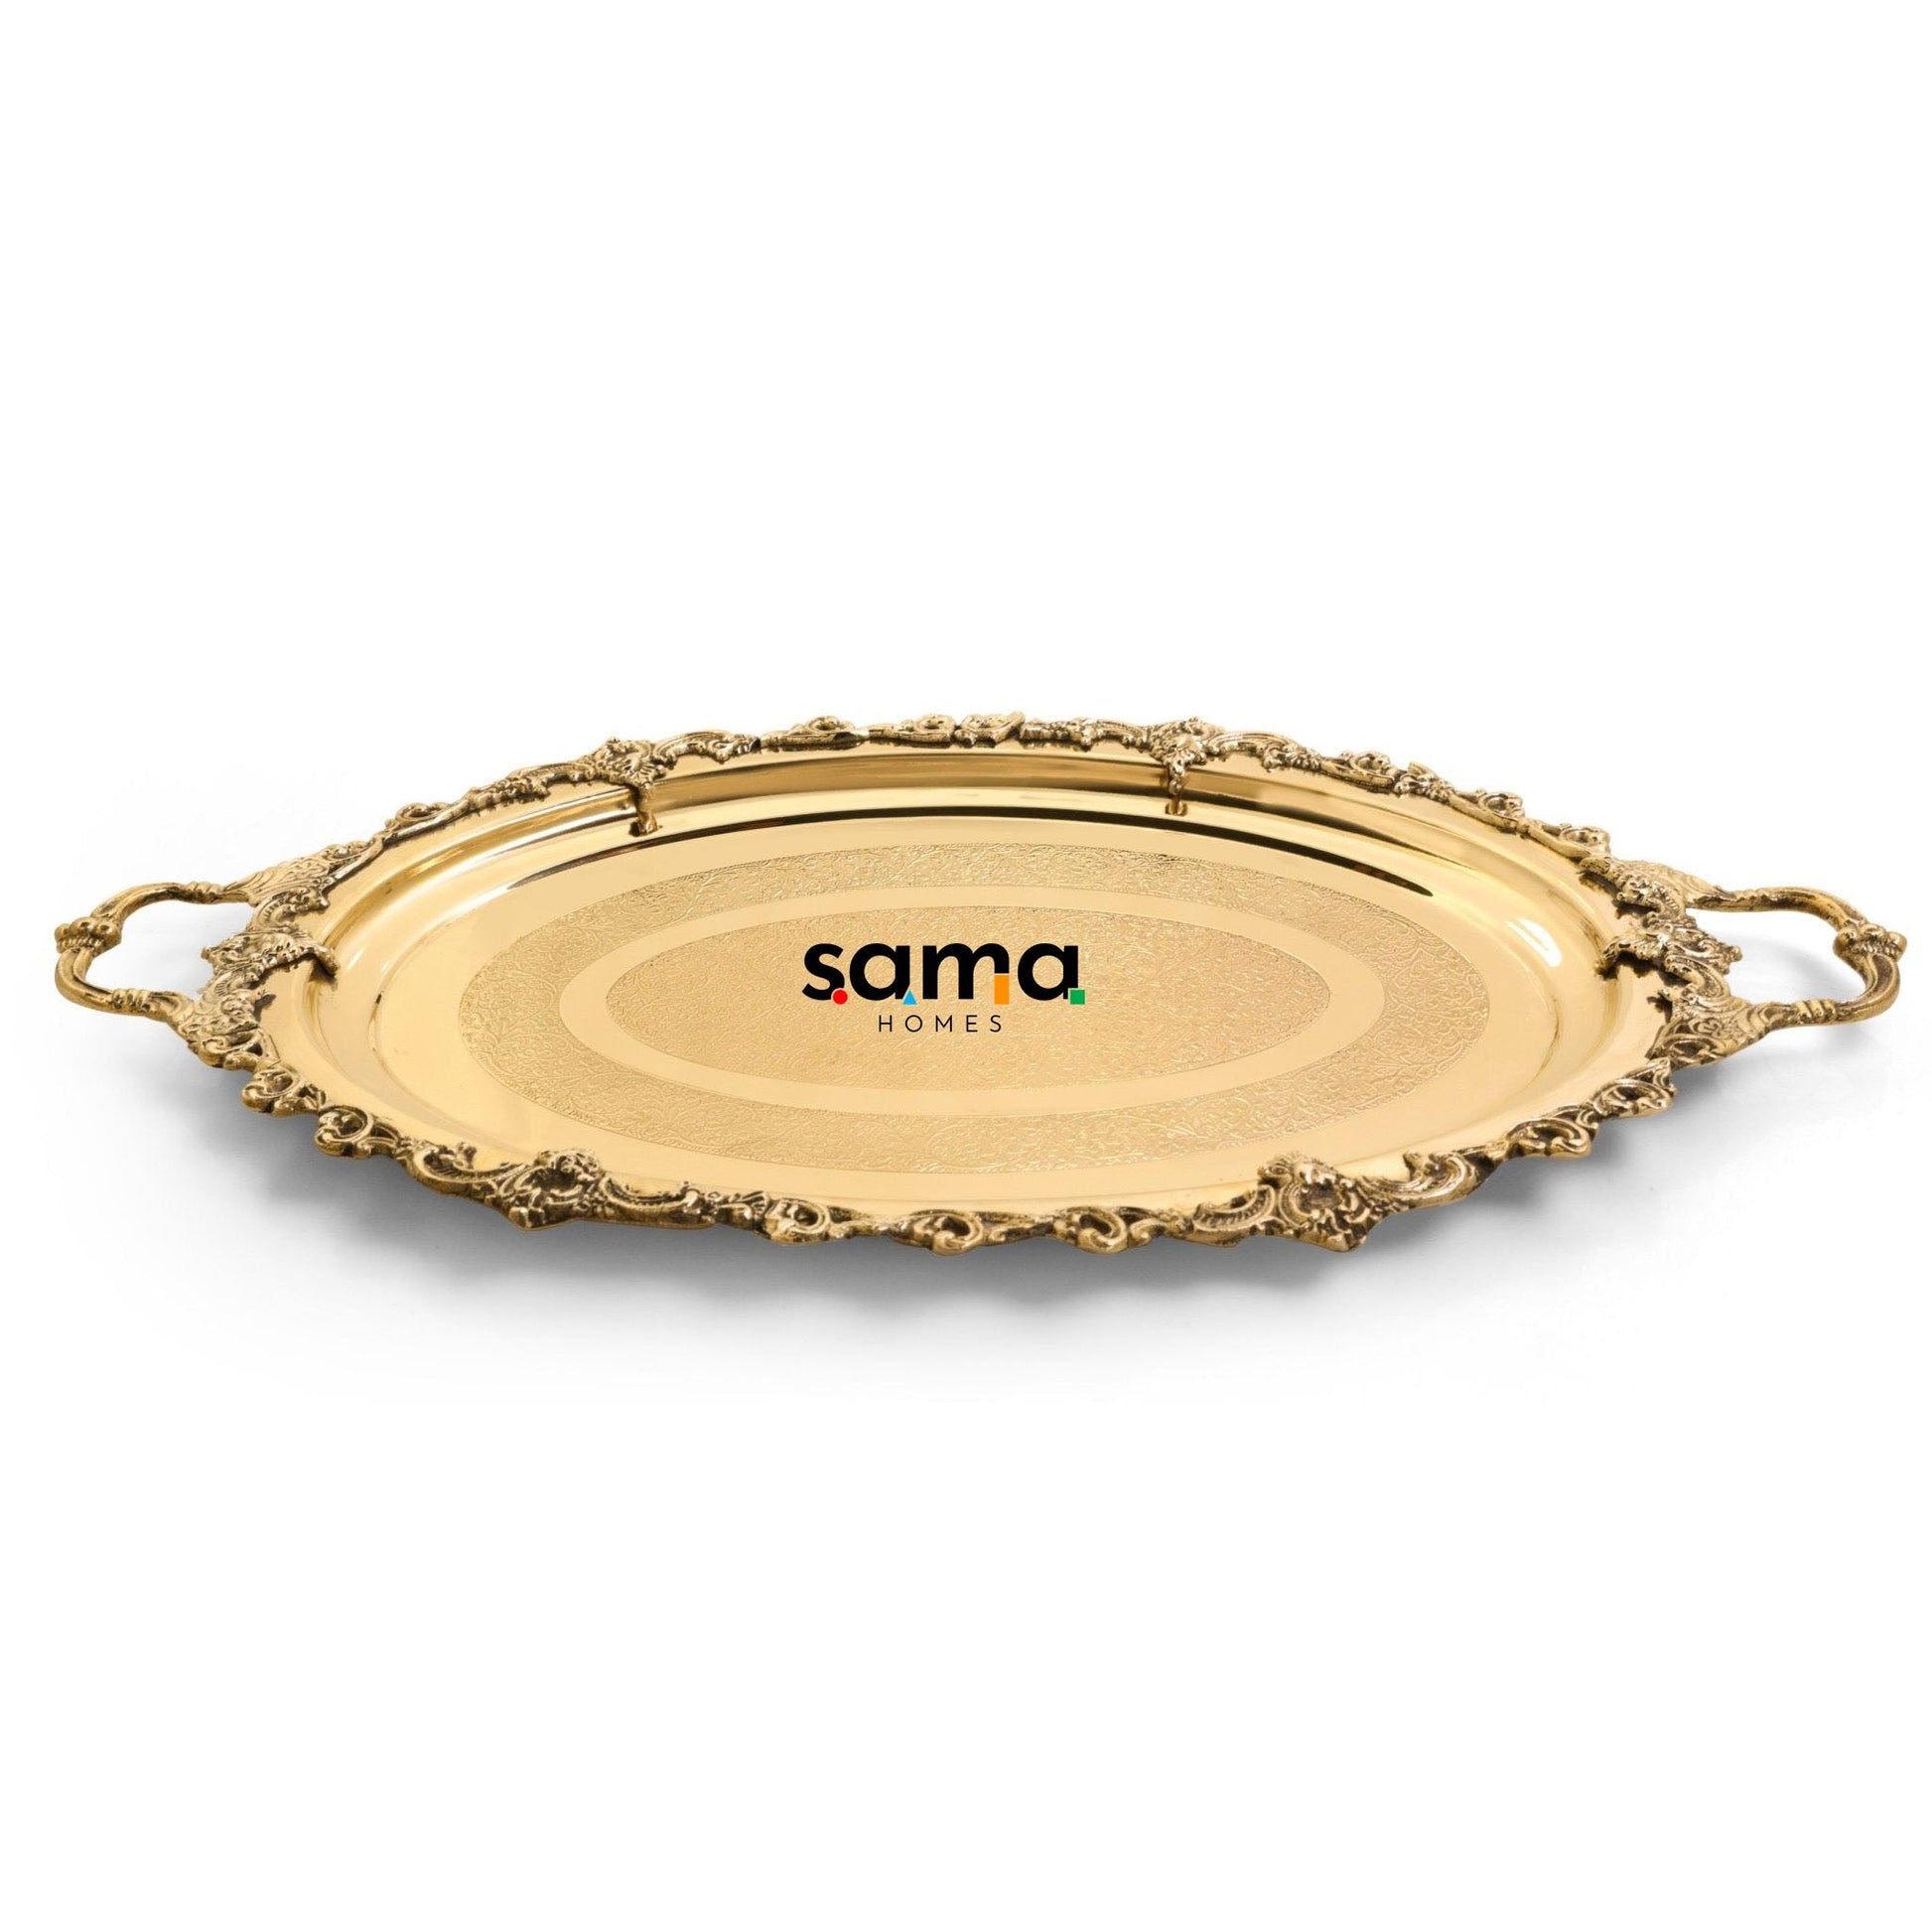 SAMA Homes - brass mughal tray